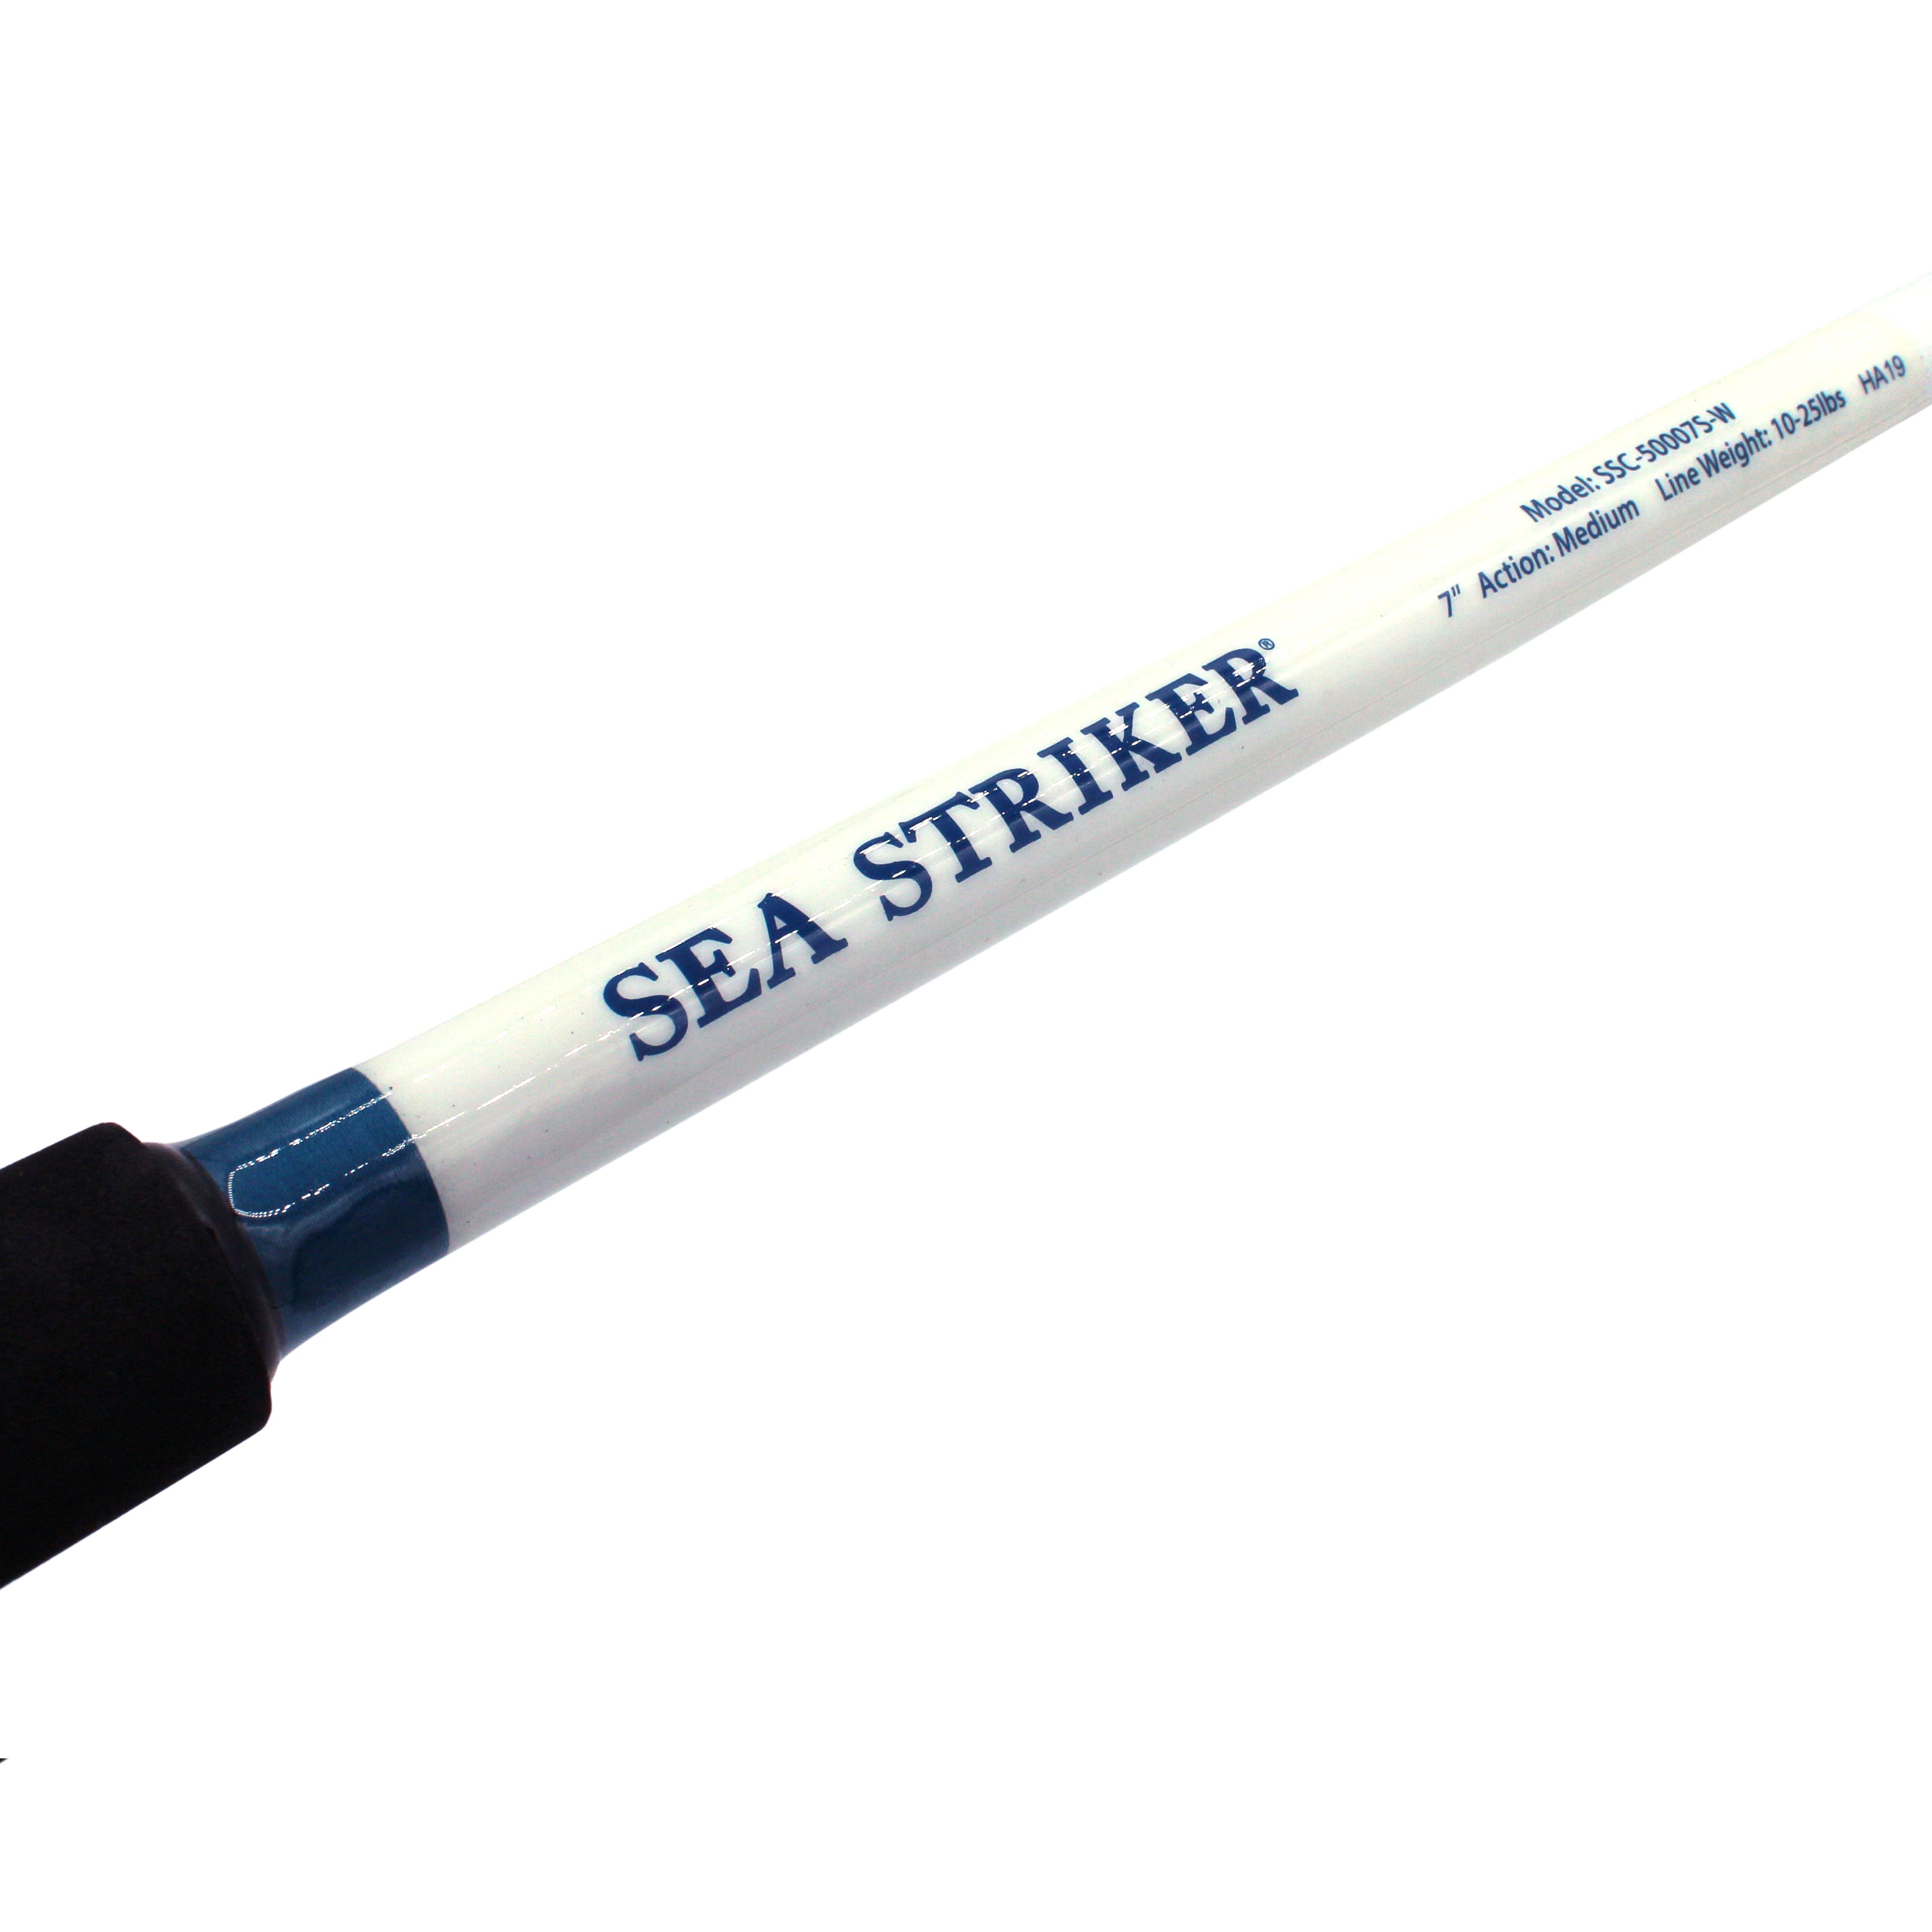 Sea Striker Got-Cha Plugs - Capt. Harry's Fishing Supply